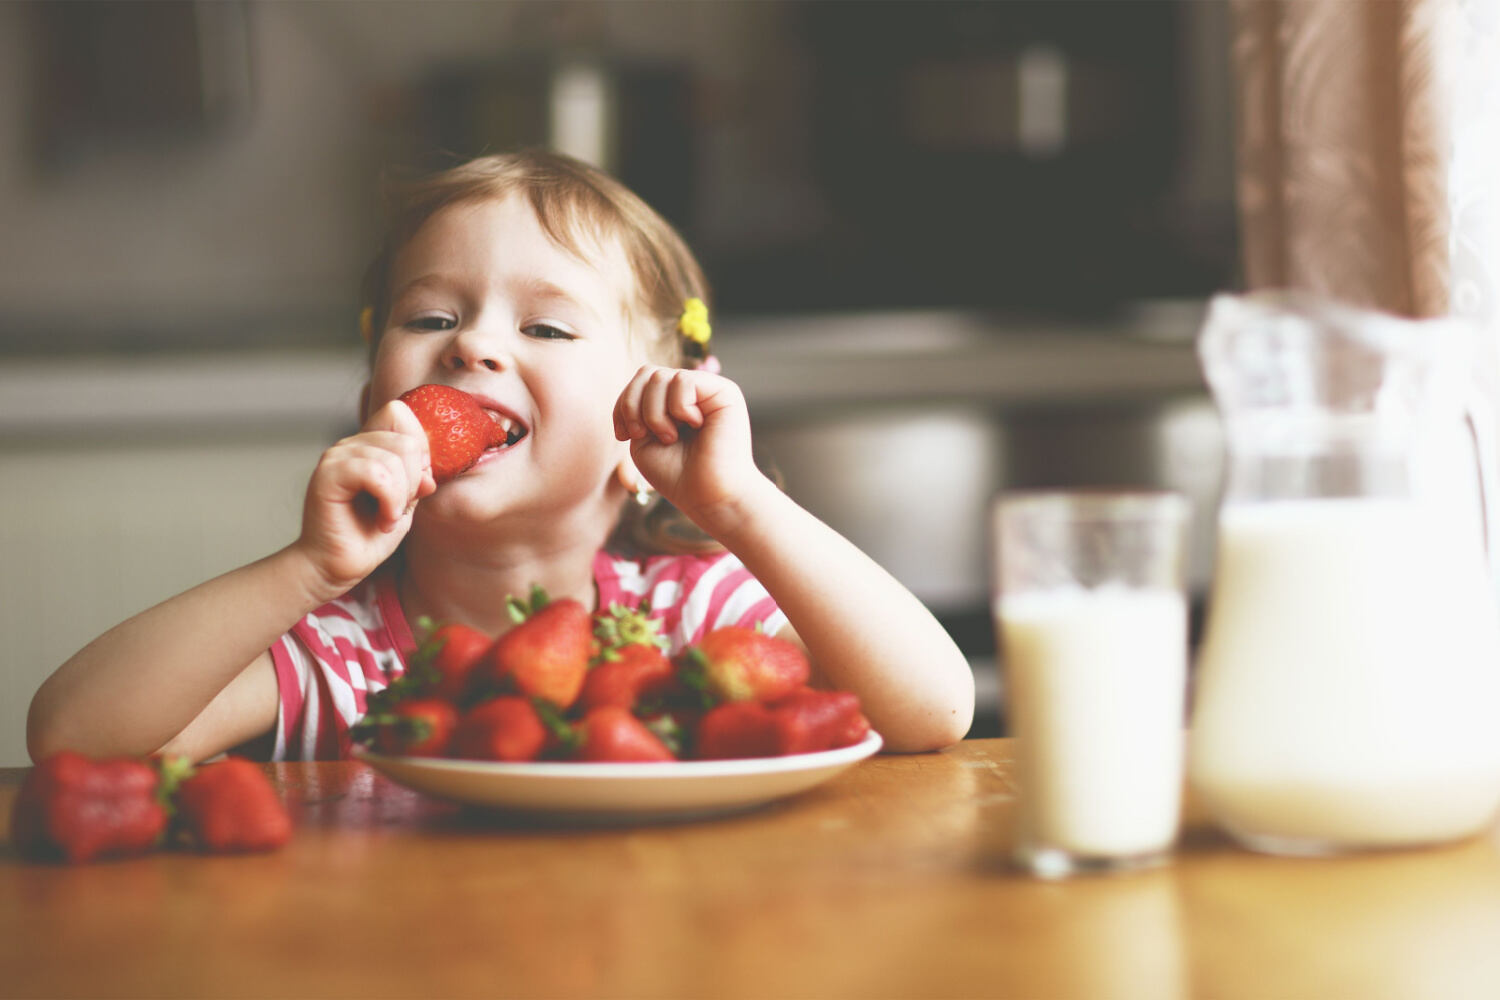 A girl eating strawberries